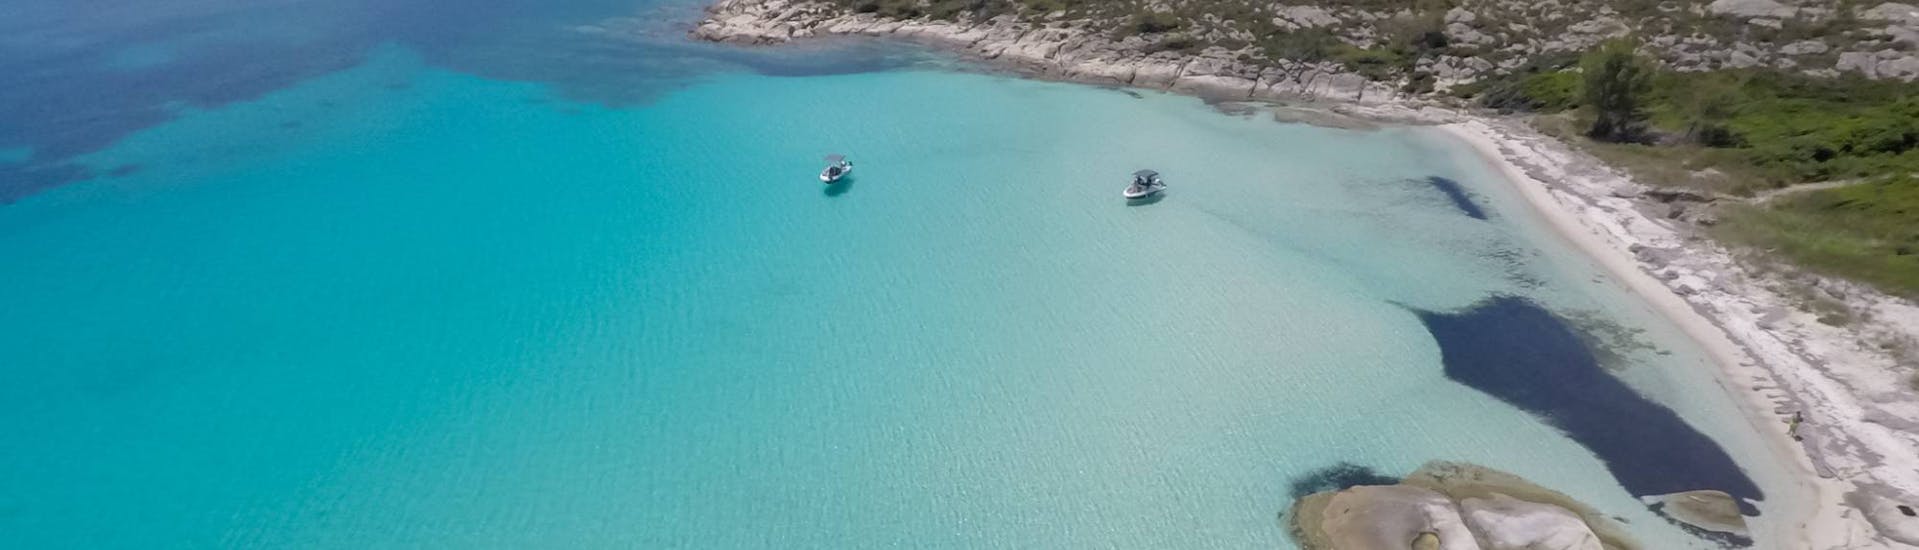 Bootverhuur in Ormos Panagias - Vourvourou, Diaporos Eiland & Blue Lagoon (Diaporos).